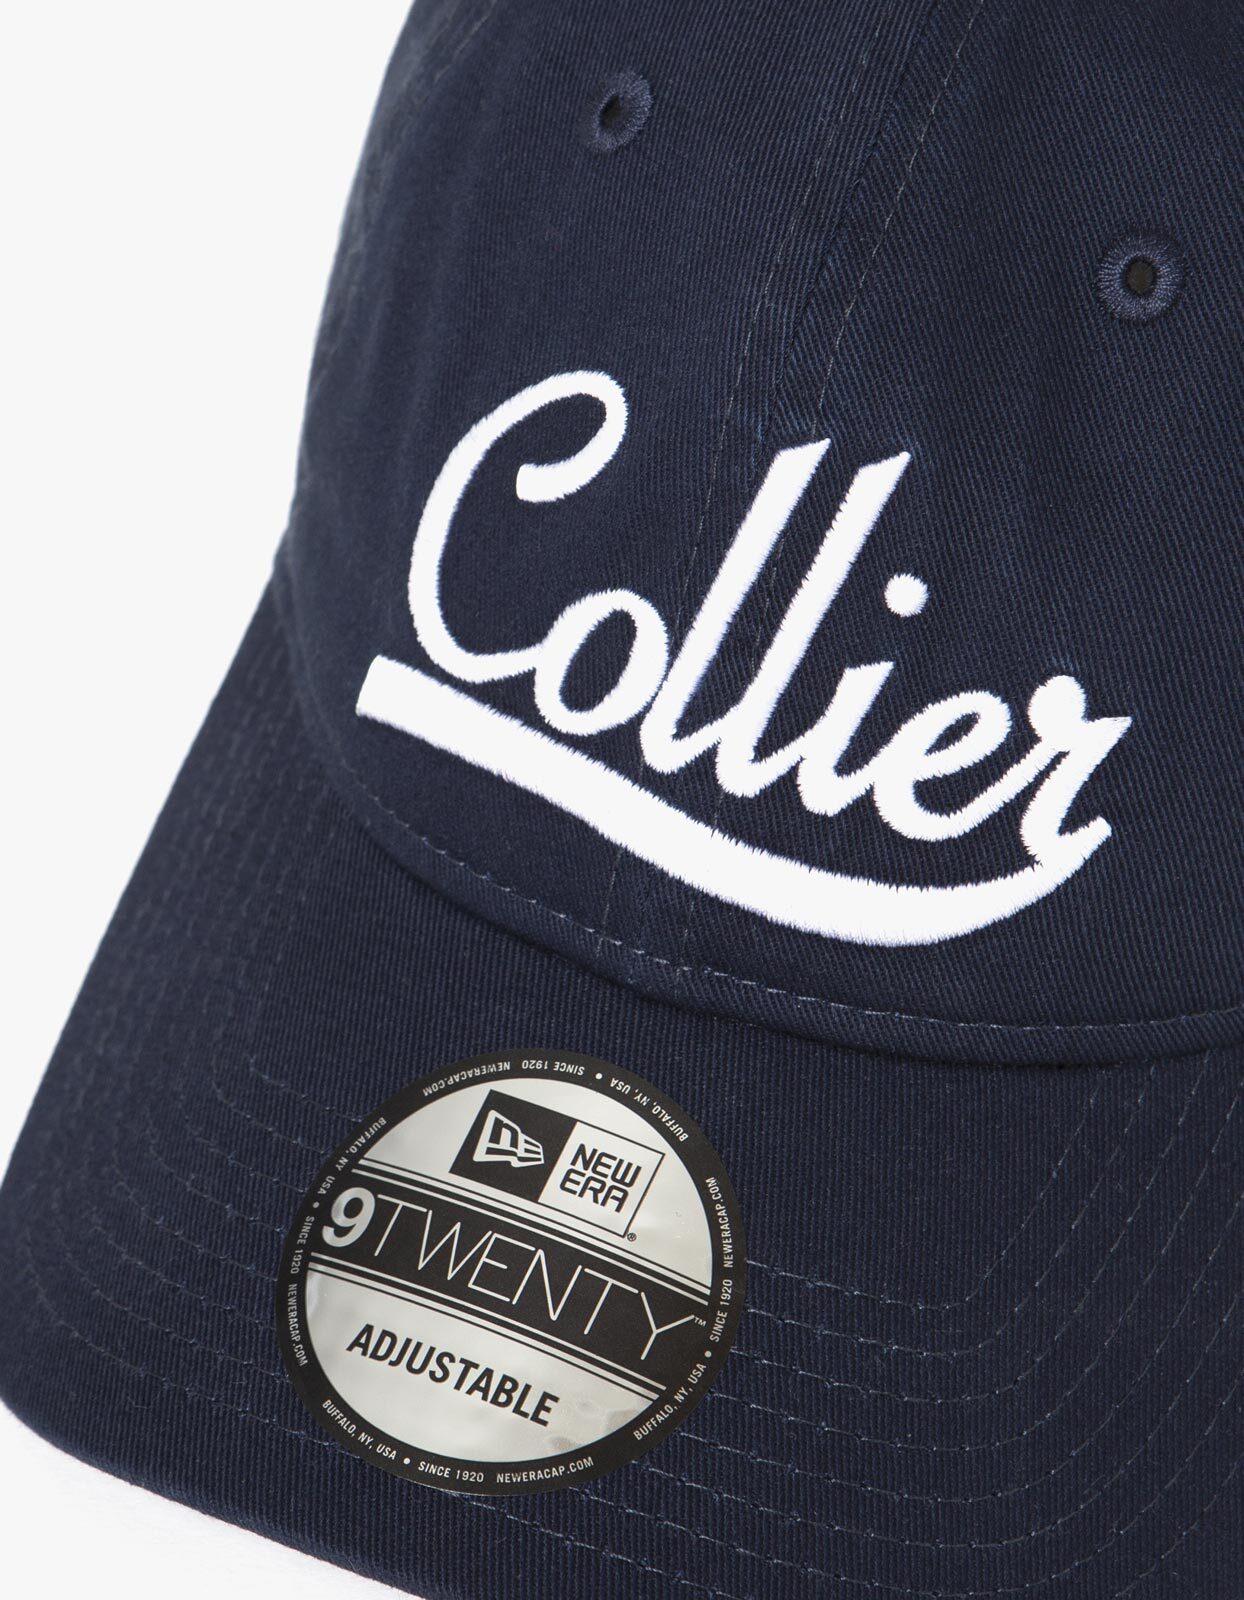 THE COLLIER CAP